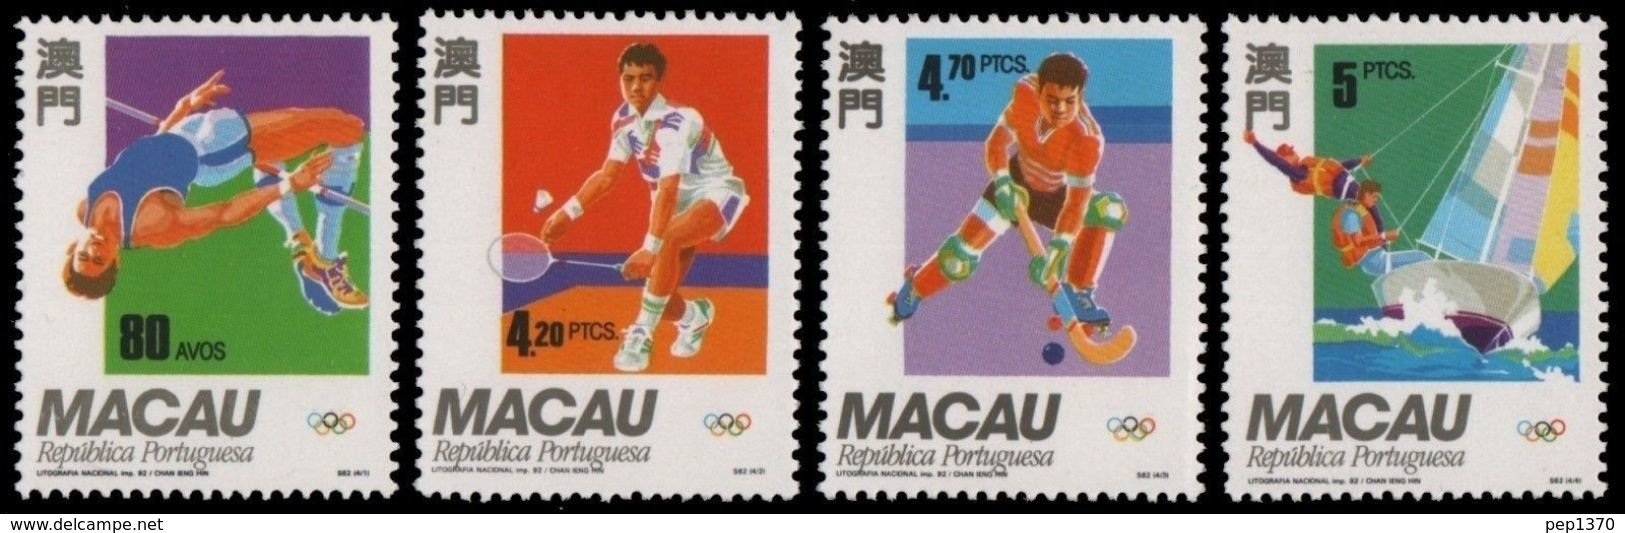 MACAU 1992 - JJOO DE BARCELONA 92 - YVERT 666-669** - MICHEL 702-705 - SCOTT 674-677 - Hockey (Veld)